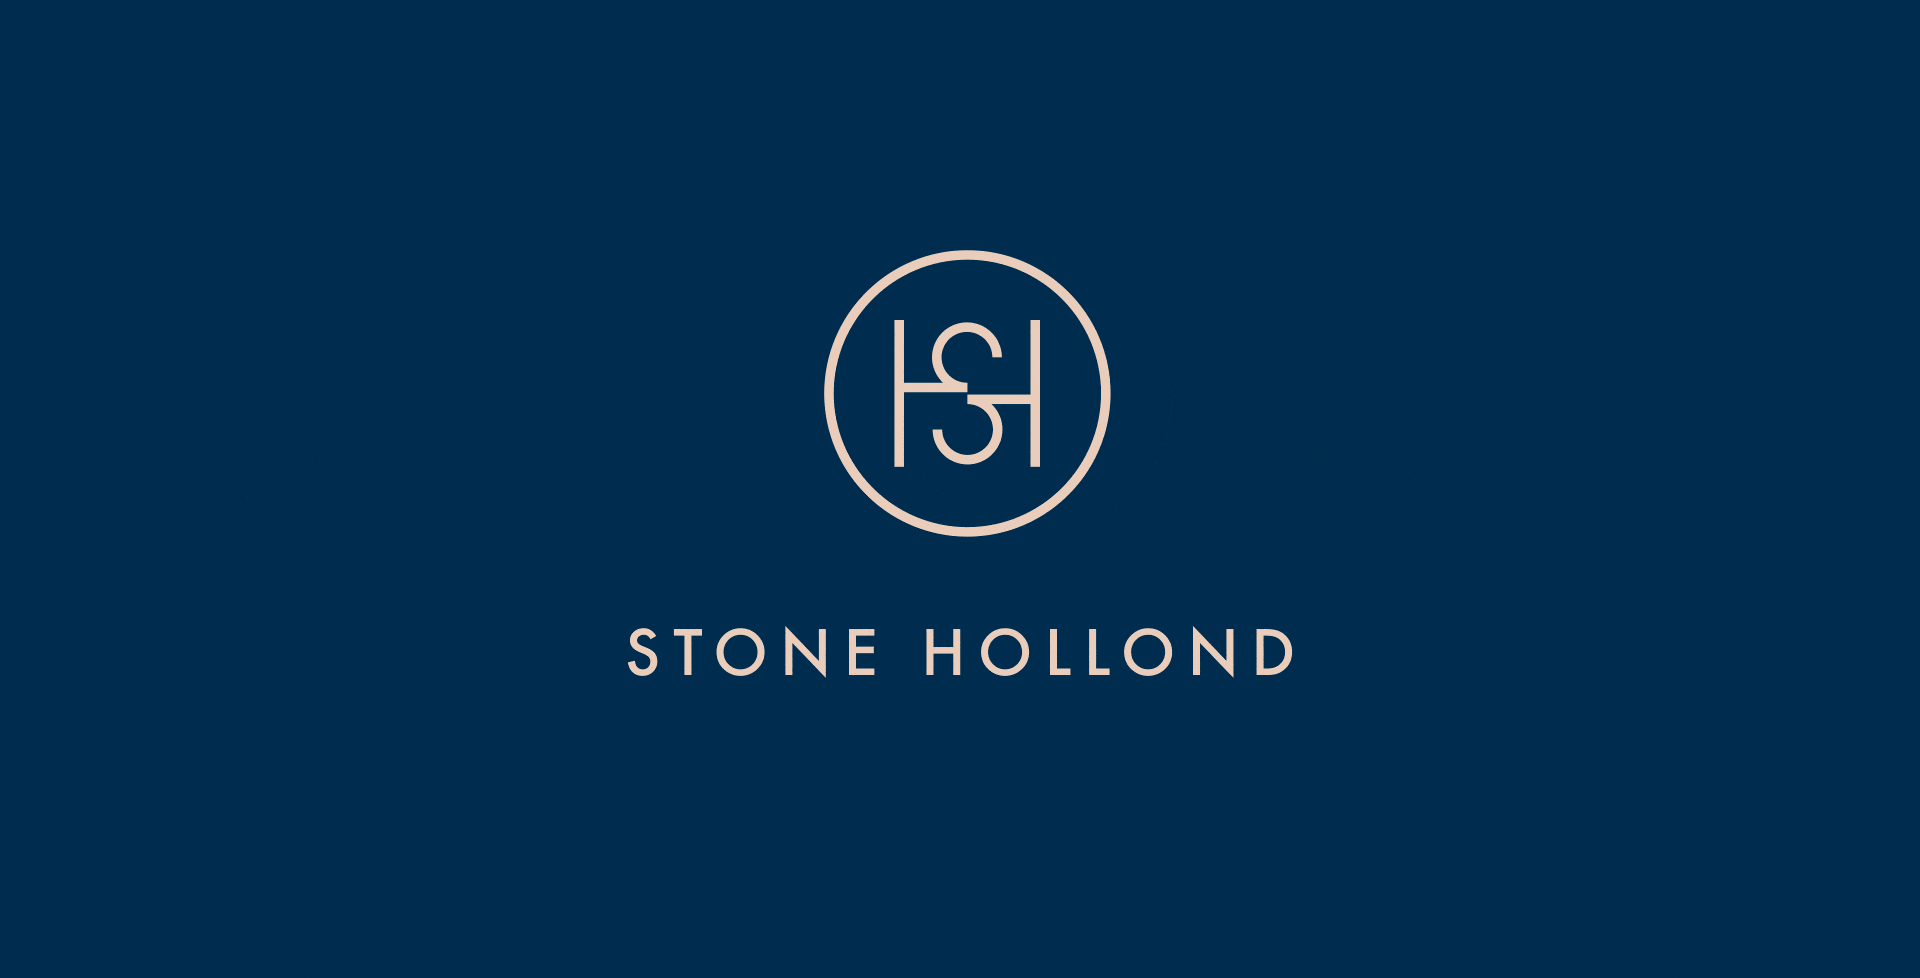 Stone Hollond Branding